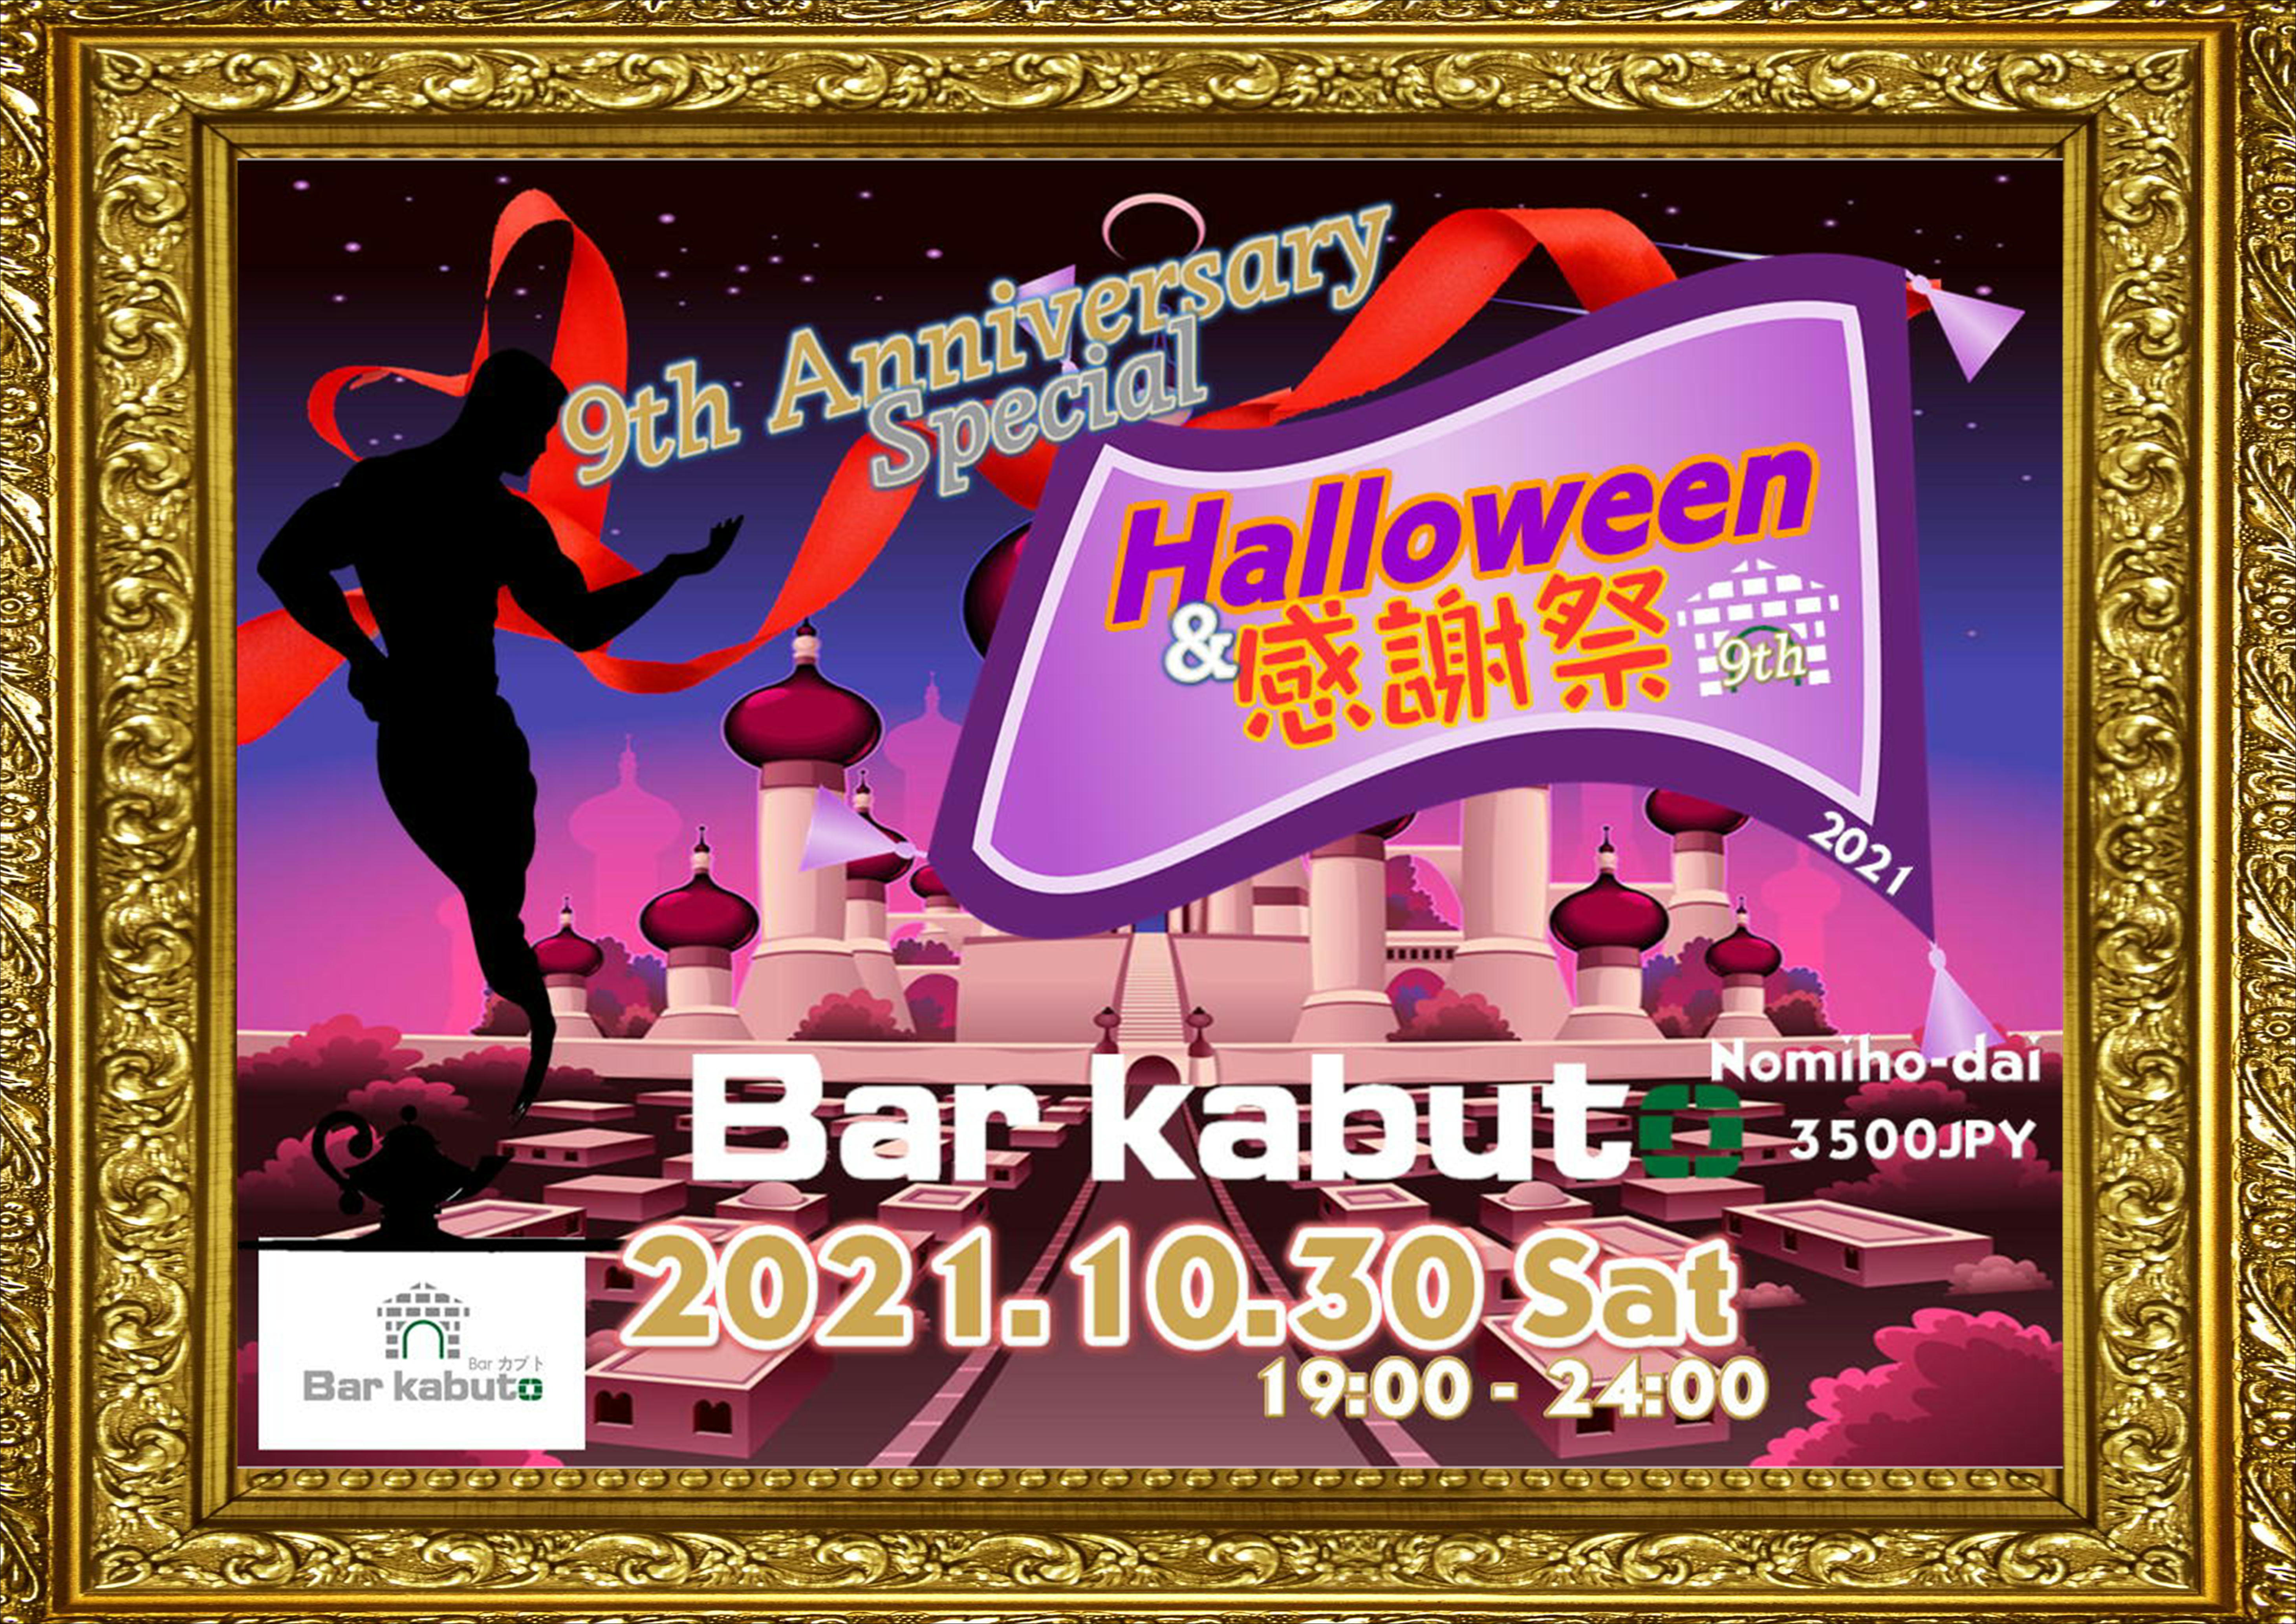 kabuto 9th Anniversary Special  Halloween & 感謝祭2021